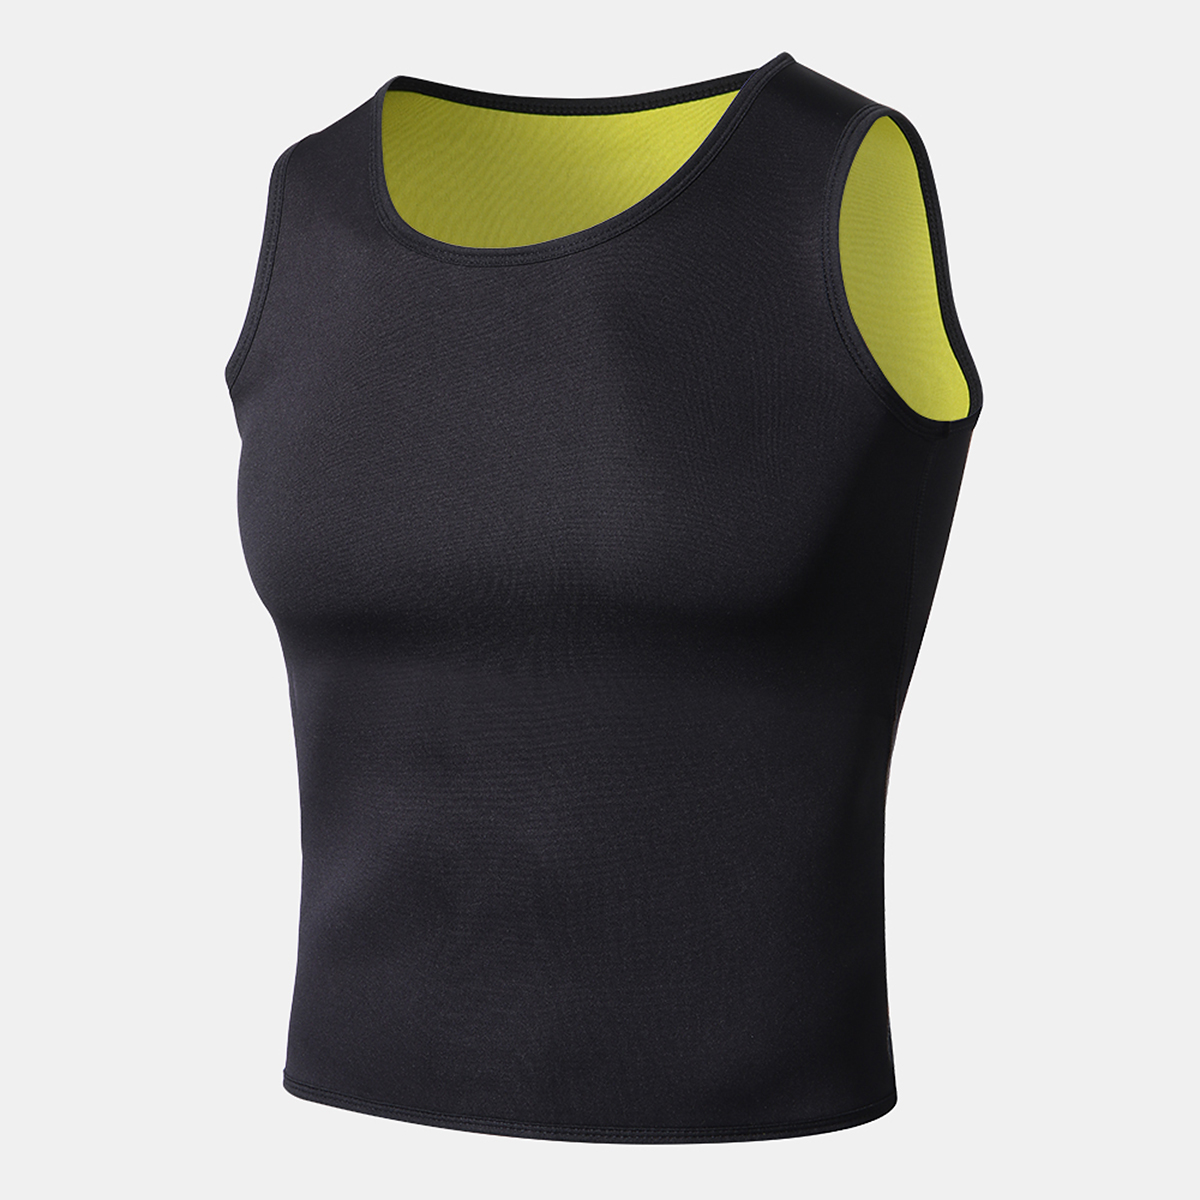 Mens-Neoprene-Body-Shaper-Slimming-Sweat-Trainer-Yoga-Gym-Cincher-Vest-1456107-6